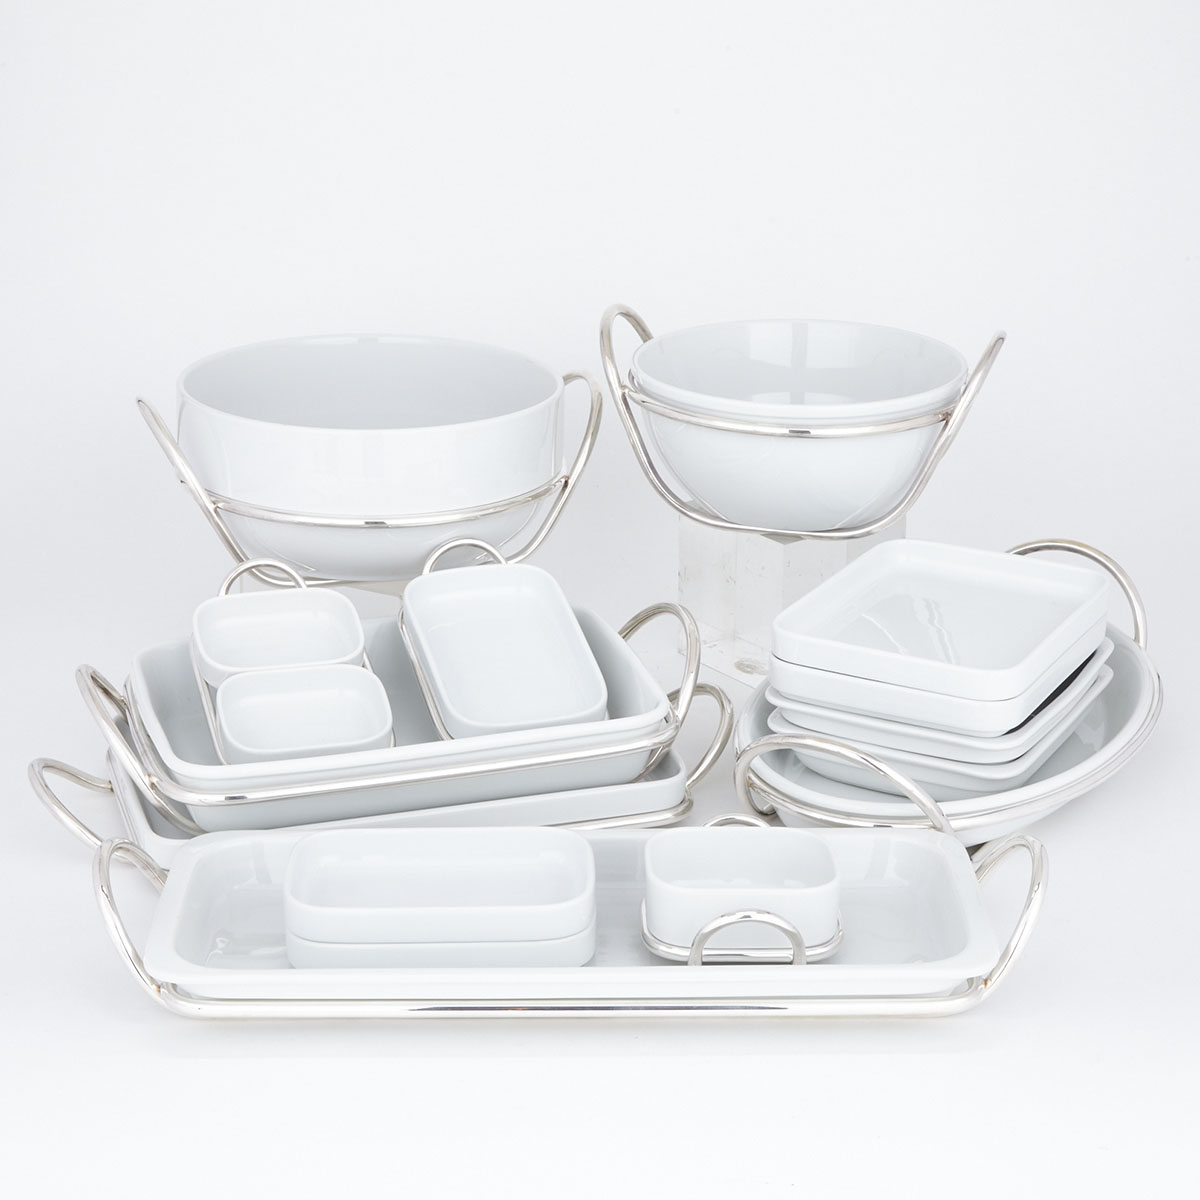 Sabattini ‘Pragma’ Silver Plated and Ceramic Oven-to-Table Wares, Lino Sabattini, 1970s 